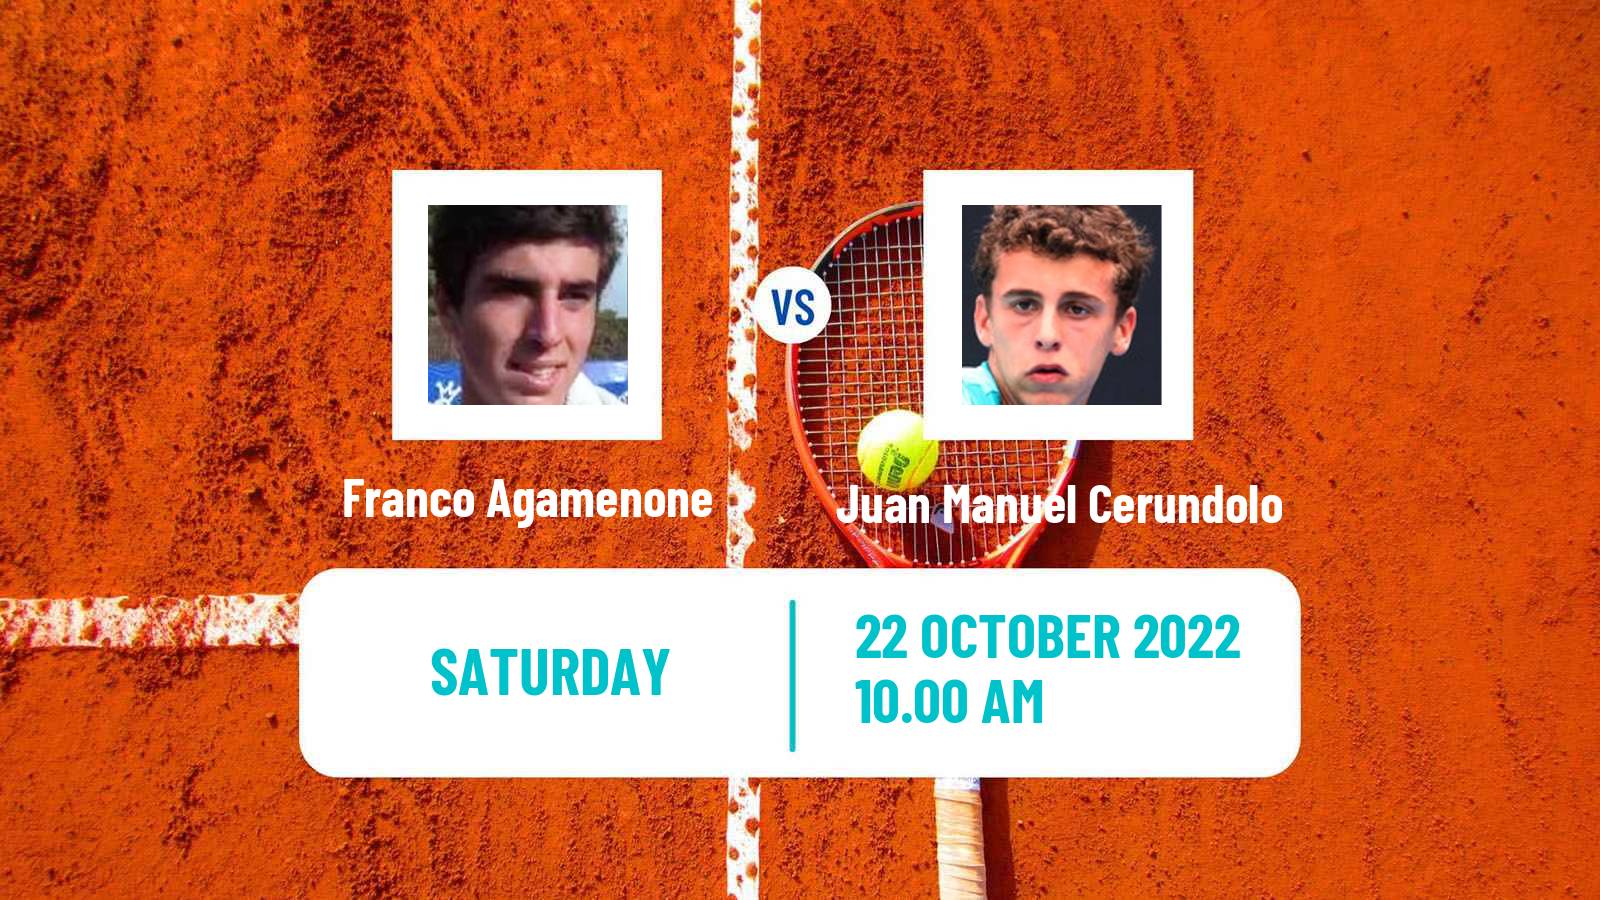 Tennis ATP Challenger Franco Agamenone - Juan Manuel Cerundolo